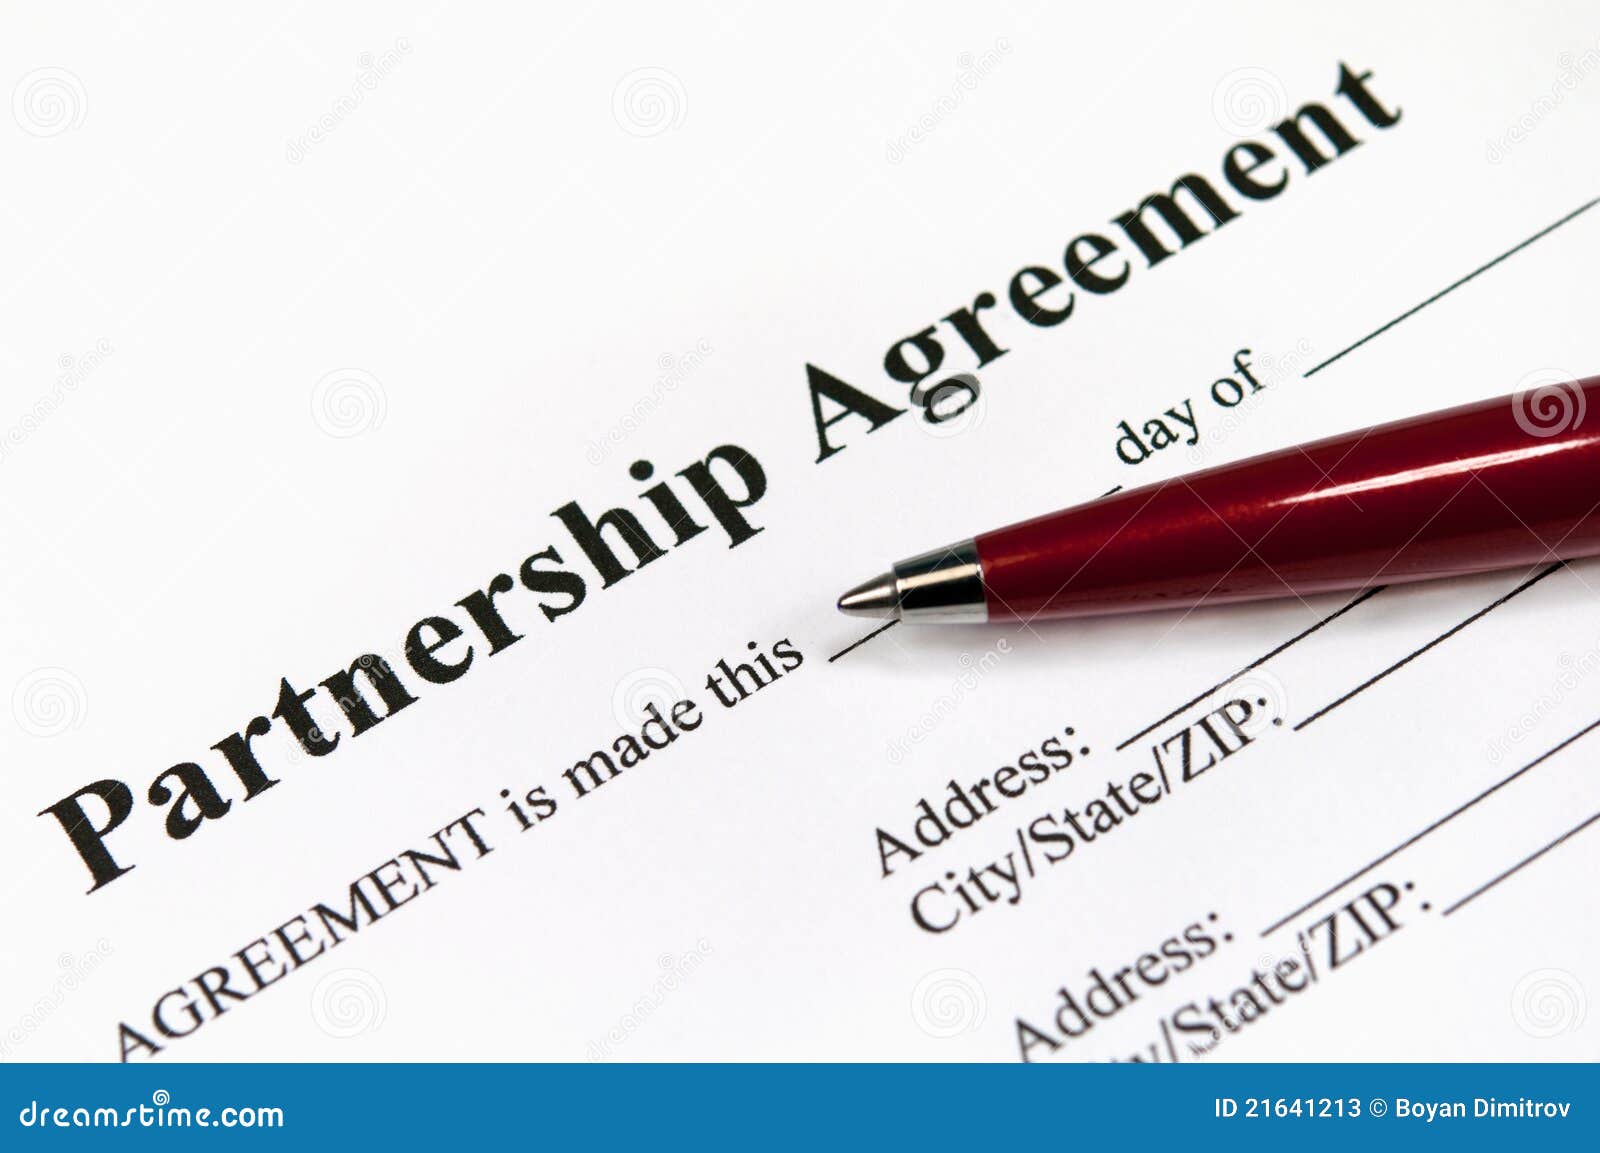 partnership-agreement-21641213.jpg